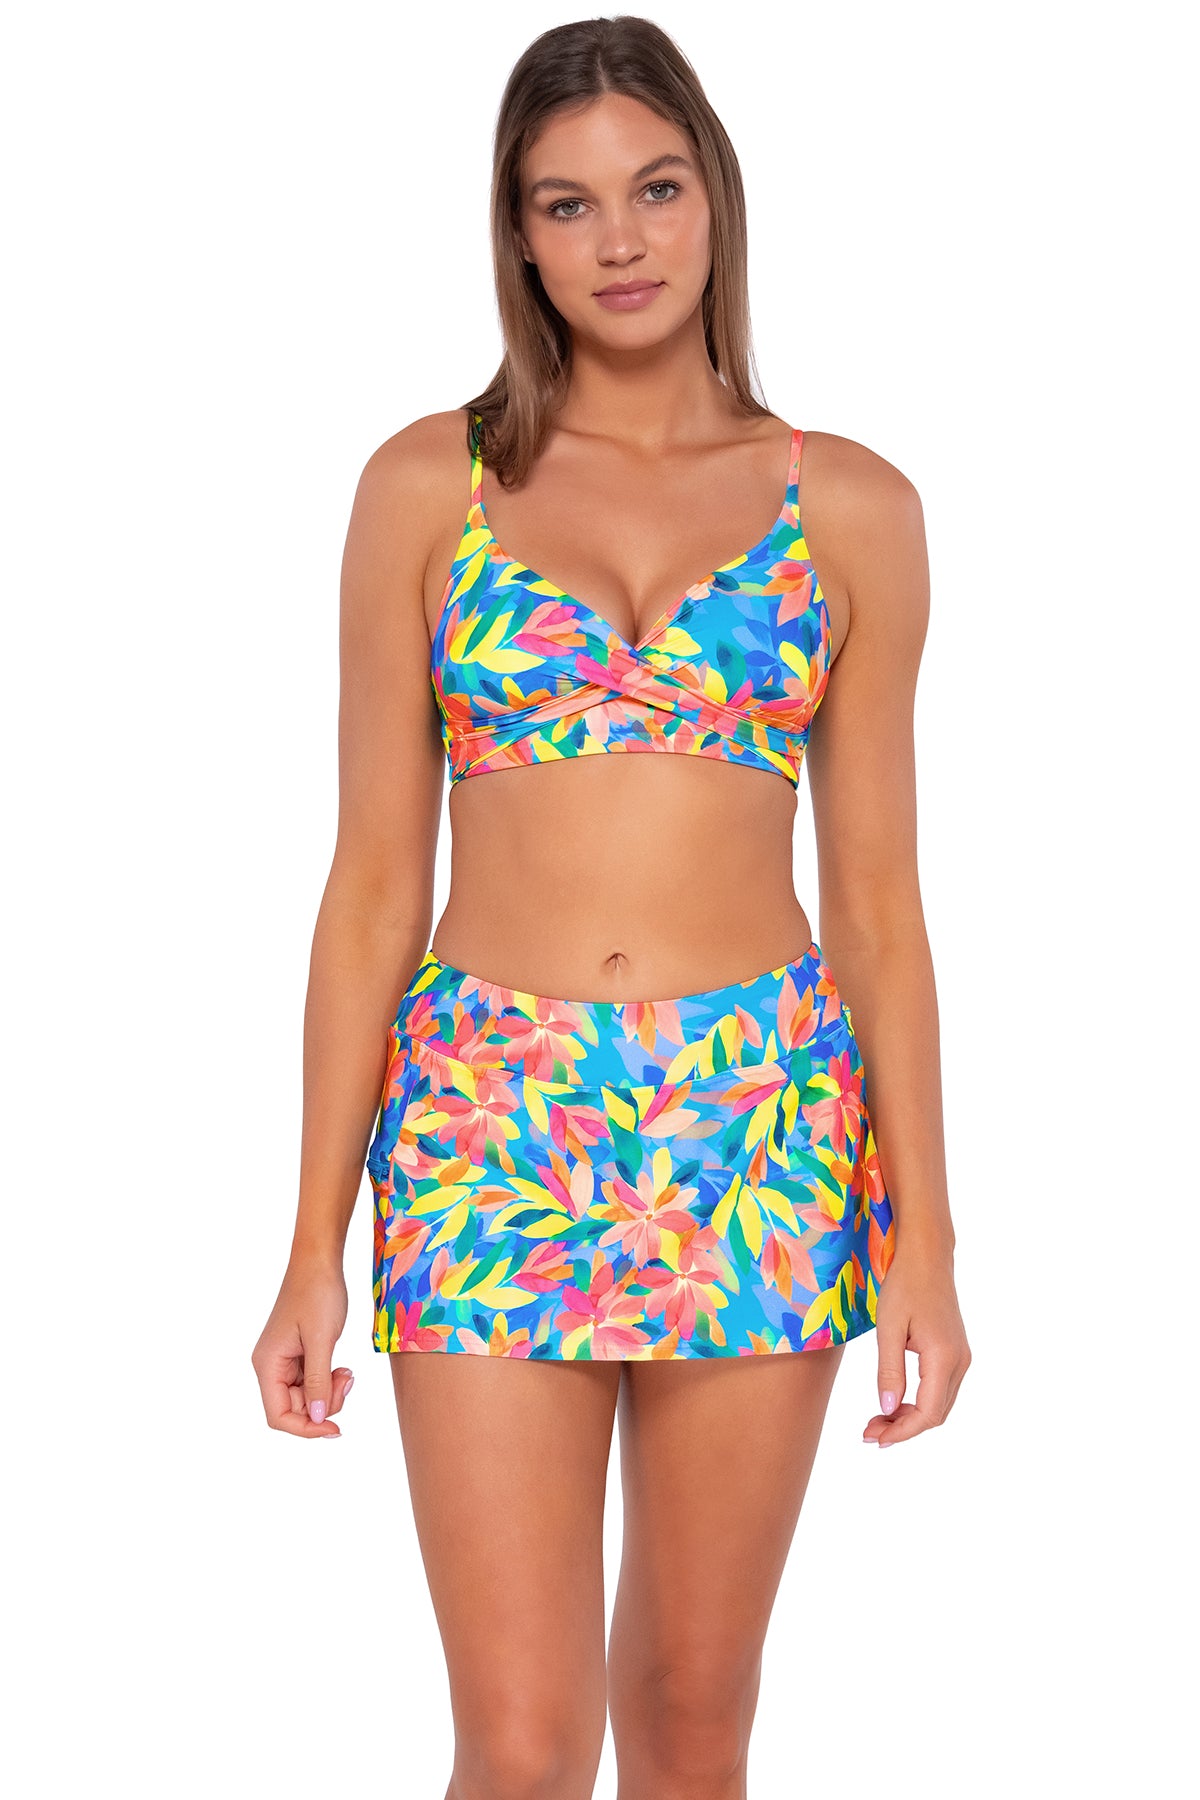 Front pose #1 of Daria wearing Sunsets Shoreline Petals Sporty Swim Skirt with matching Lyla Bralette bikini top